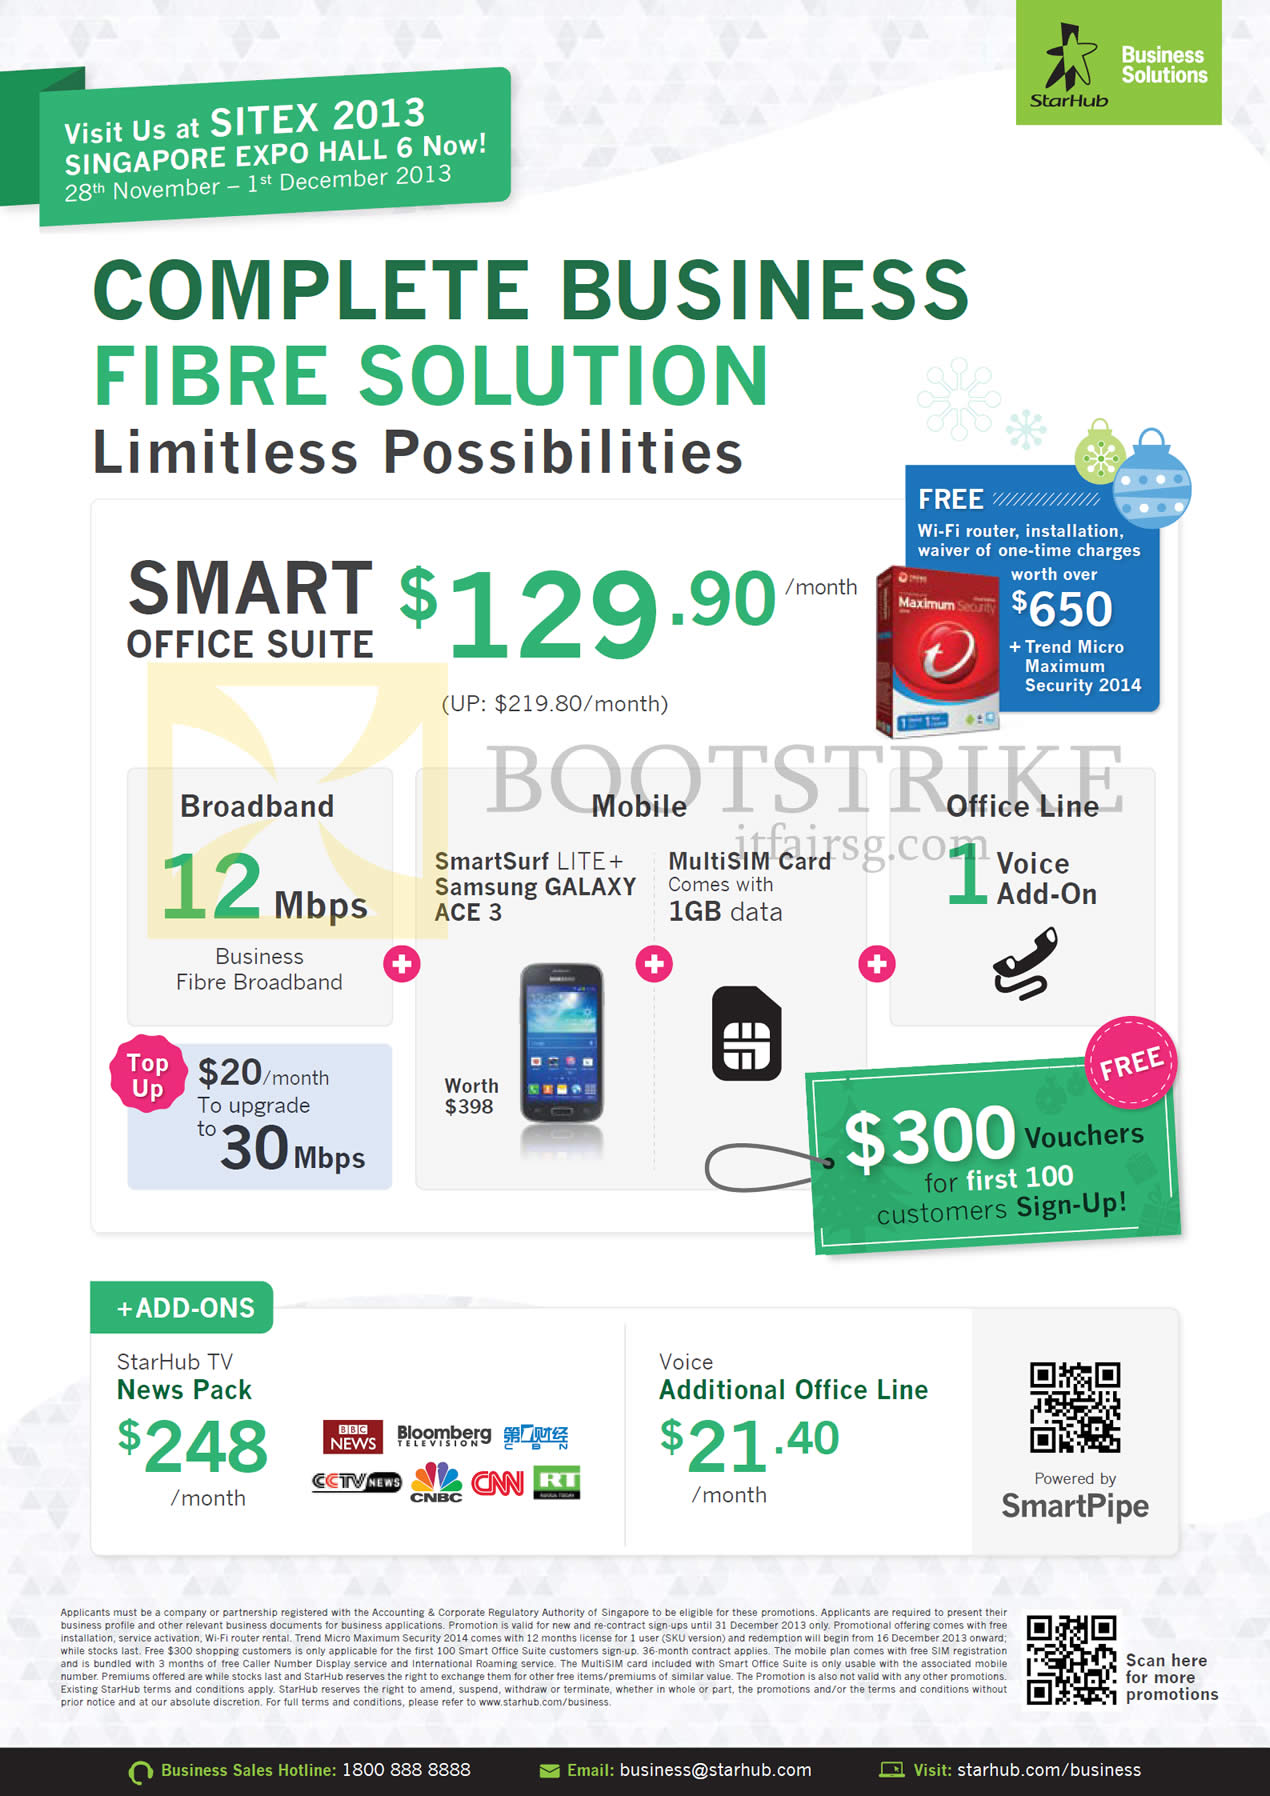 SITEX 2013 price list image brochure of Starhub Business Smart Office Suite Broadband, Mobile, Office Voice Line, TV